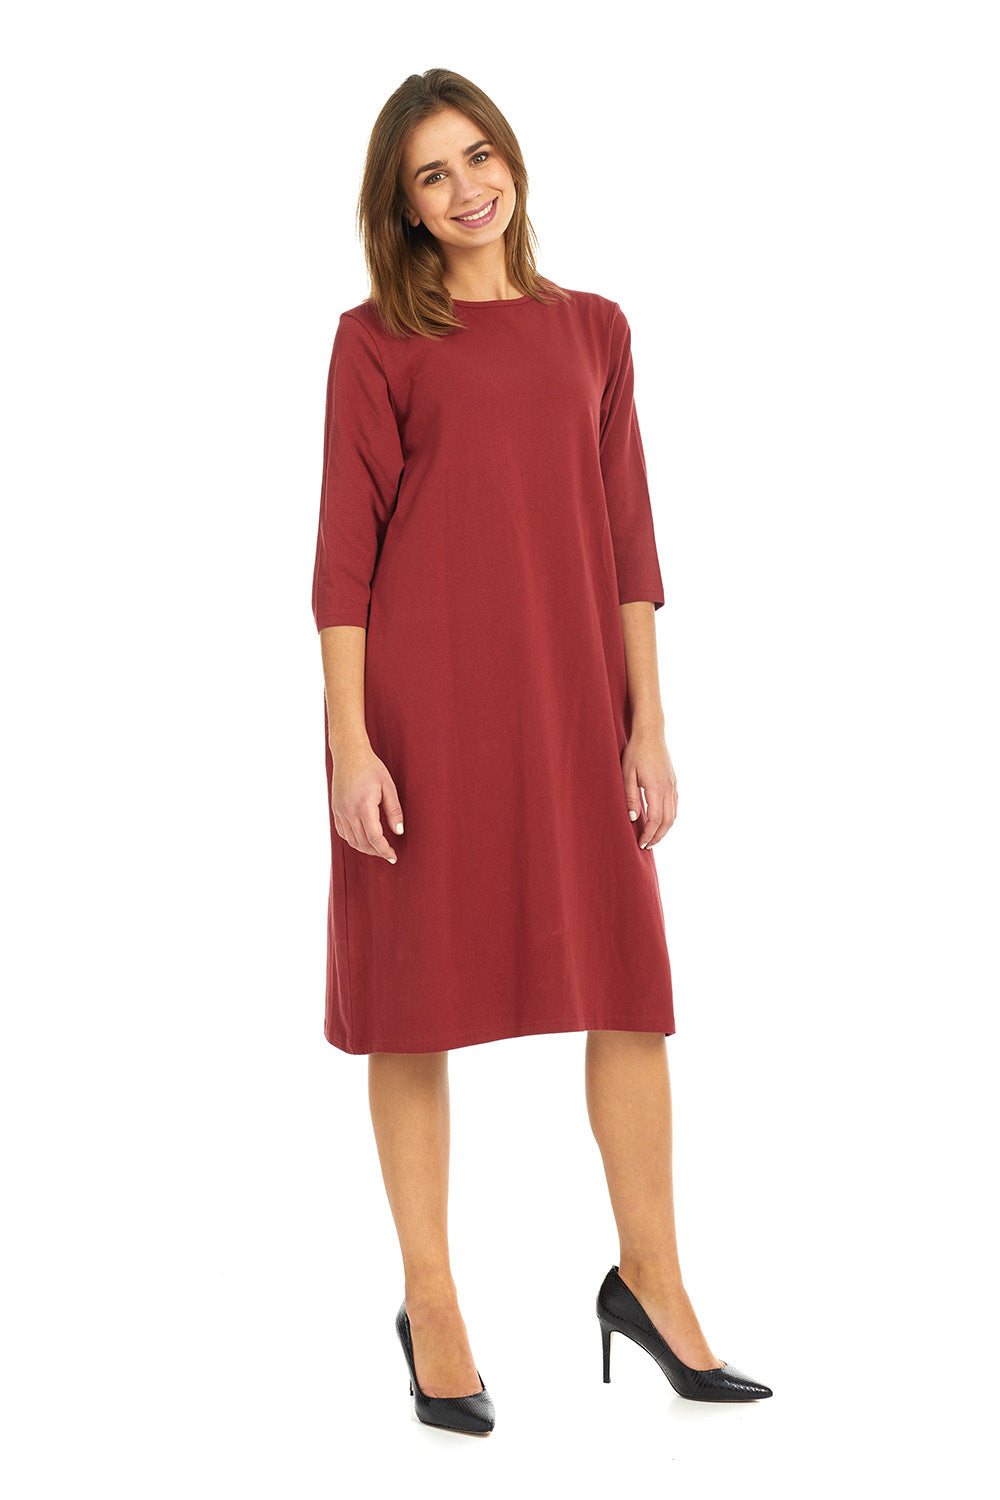 Esteez TEE Dress - Women's Cotton Spandex Casual Shift Dress - 3/4 Sleeves - BURGANDY